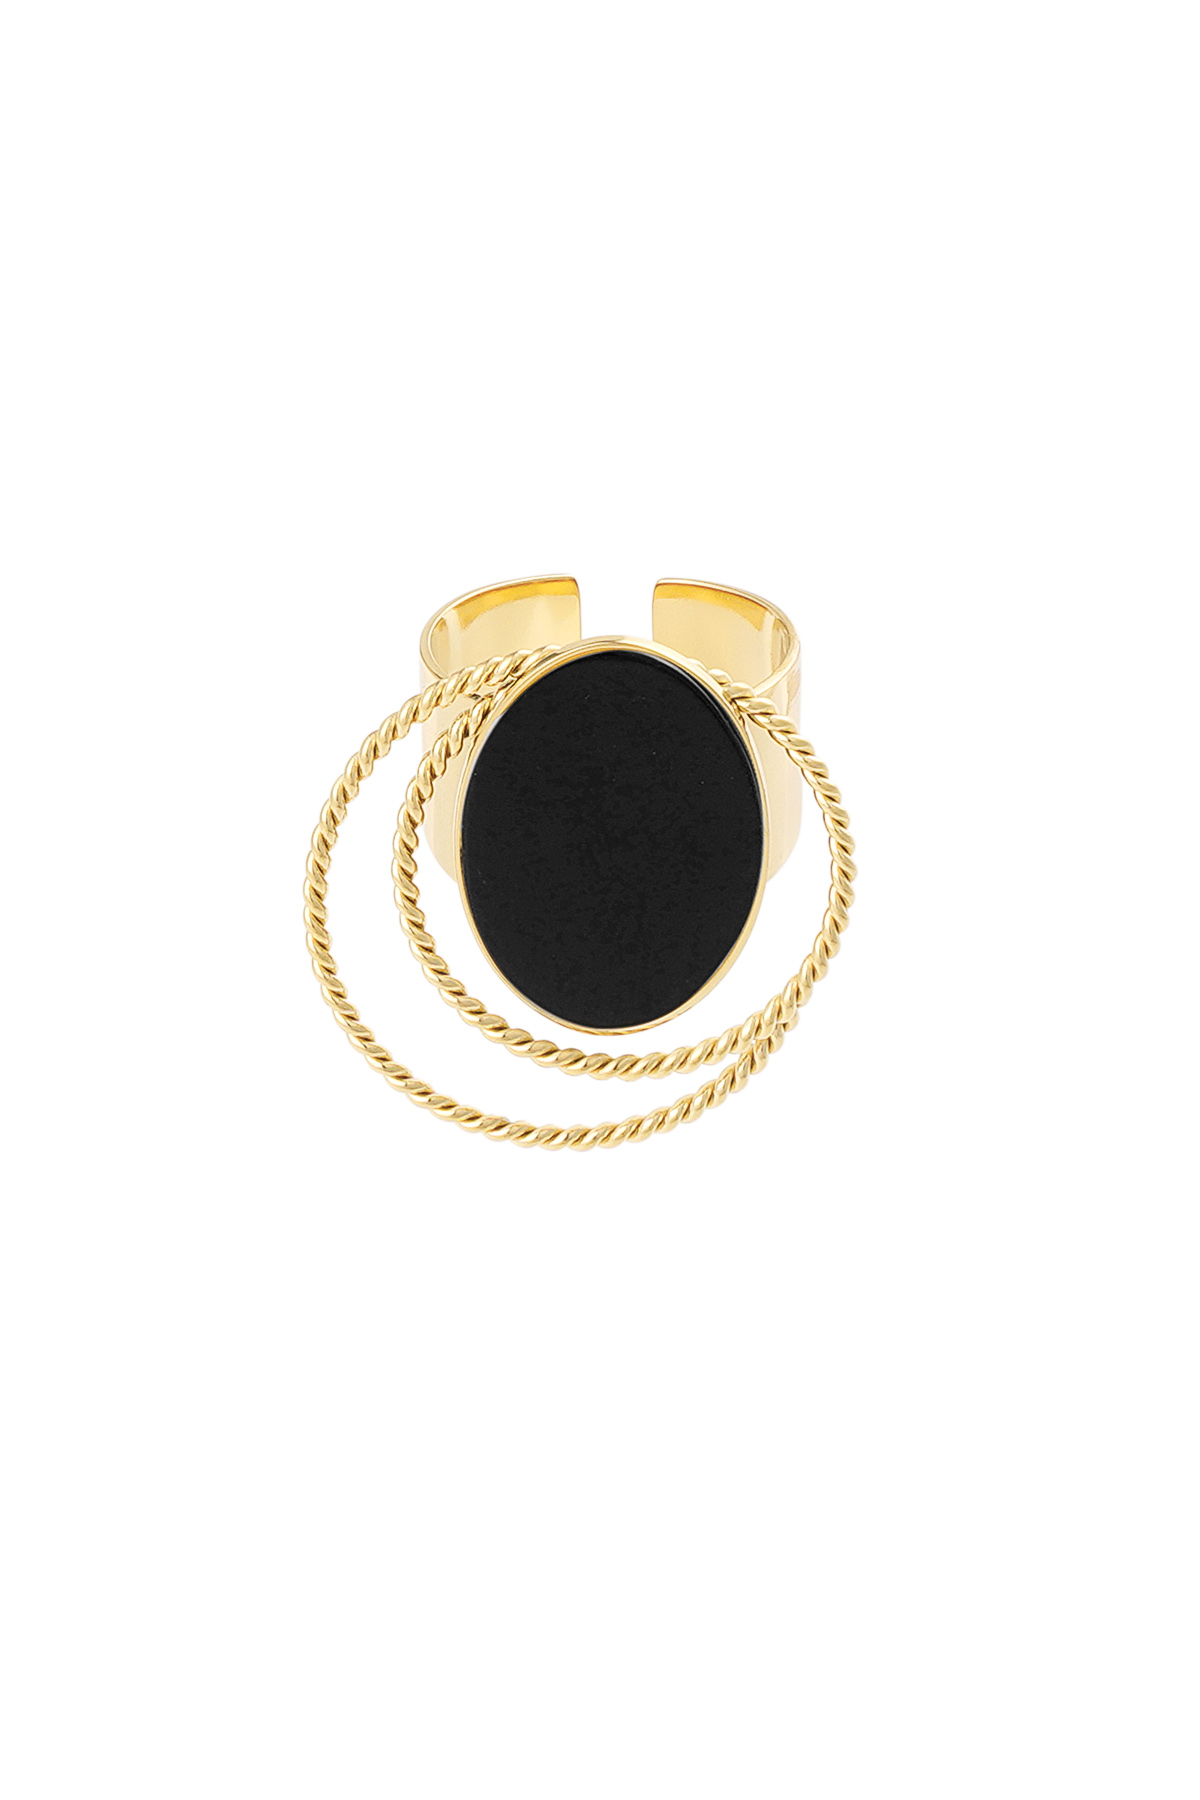 Ring steen met cirkels - goud/zwart